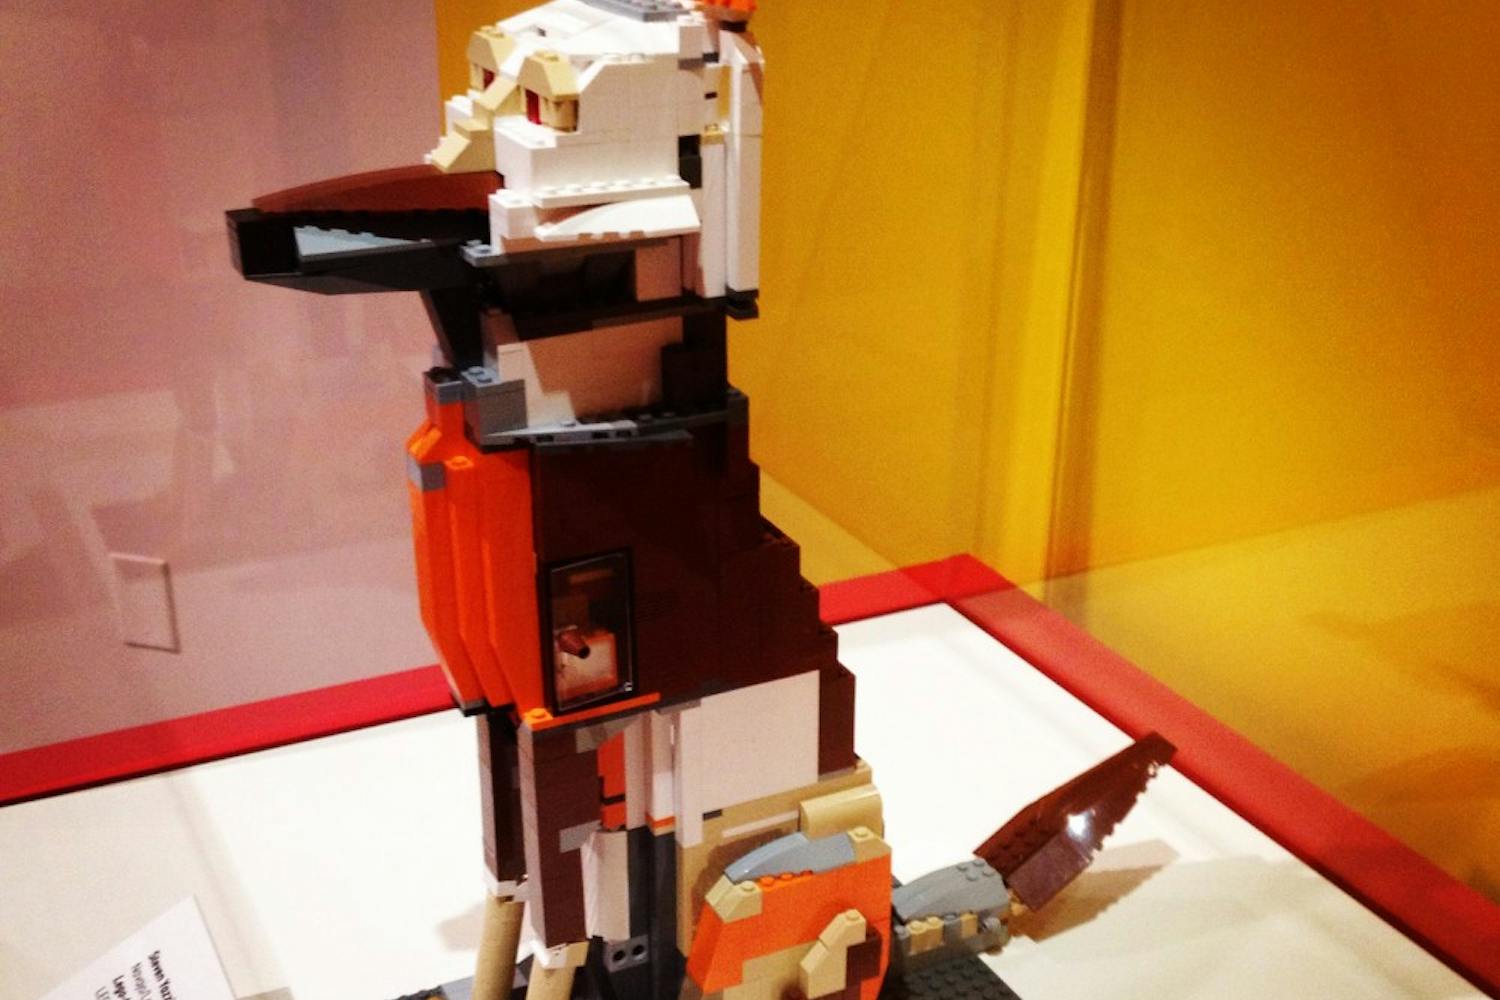 "Lego-te" by Steven and Wyatt Yazzie.